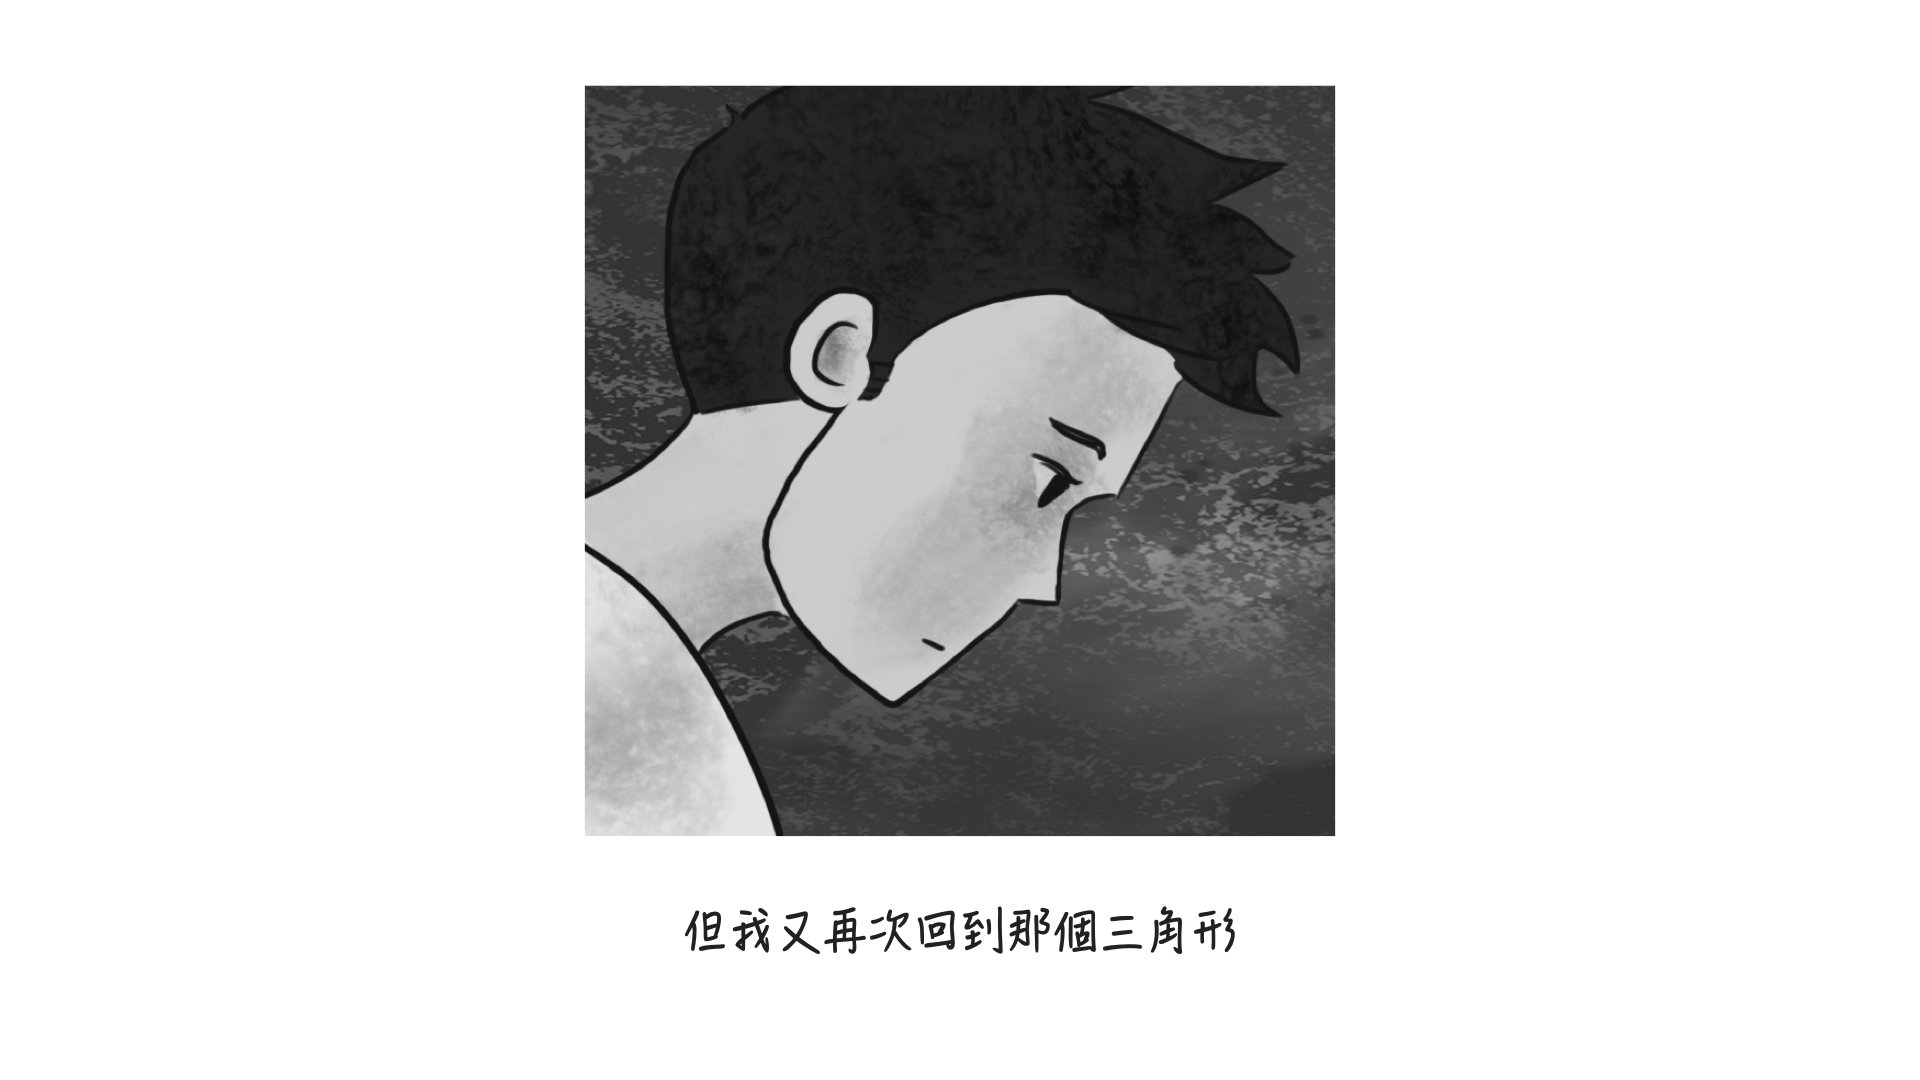 PP_Comic_Chinese_TW.054.jpeg